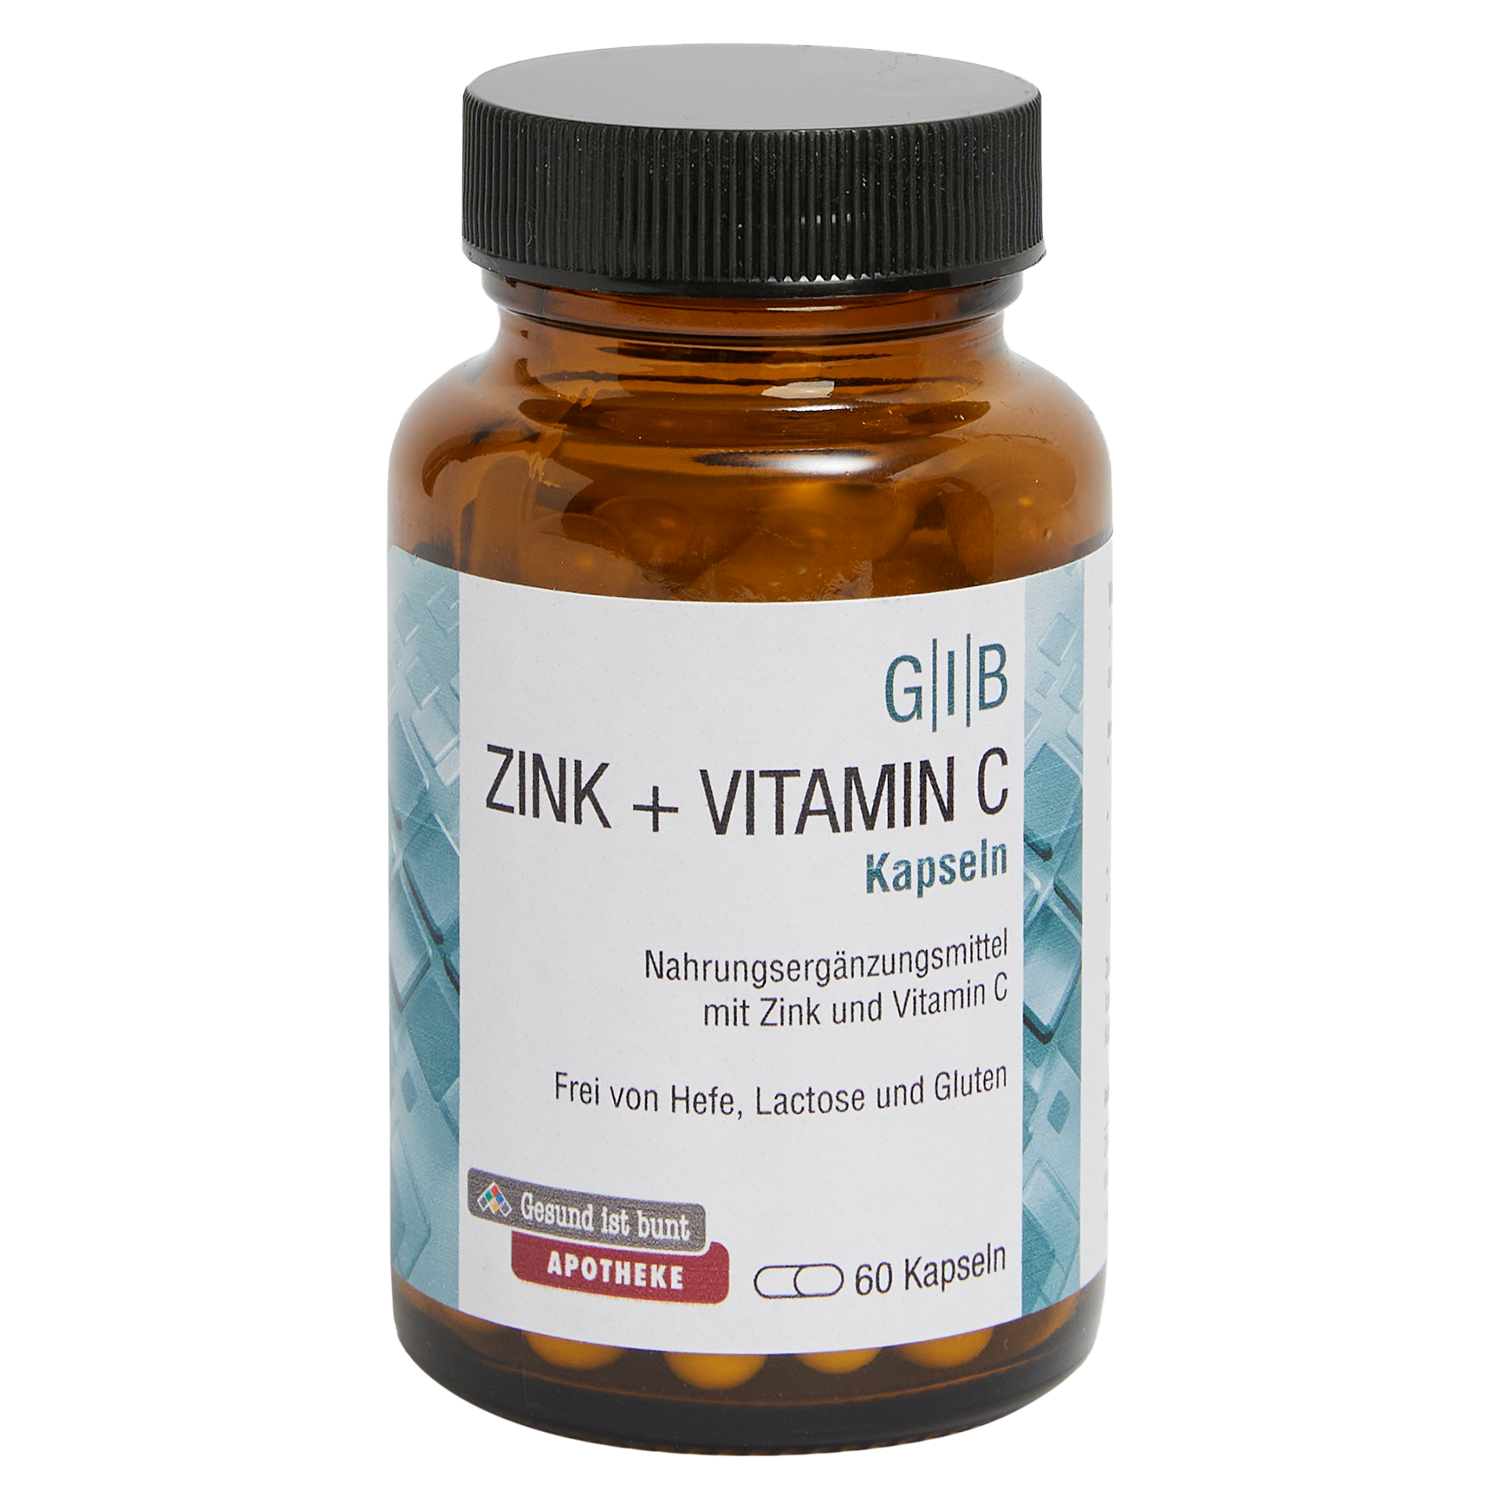 G|I|B Zink + Vitamin C